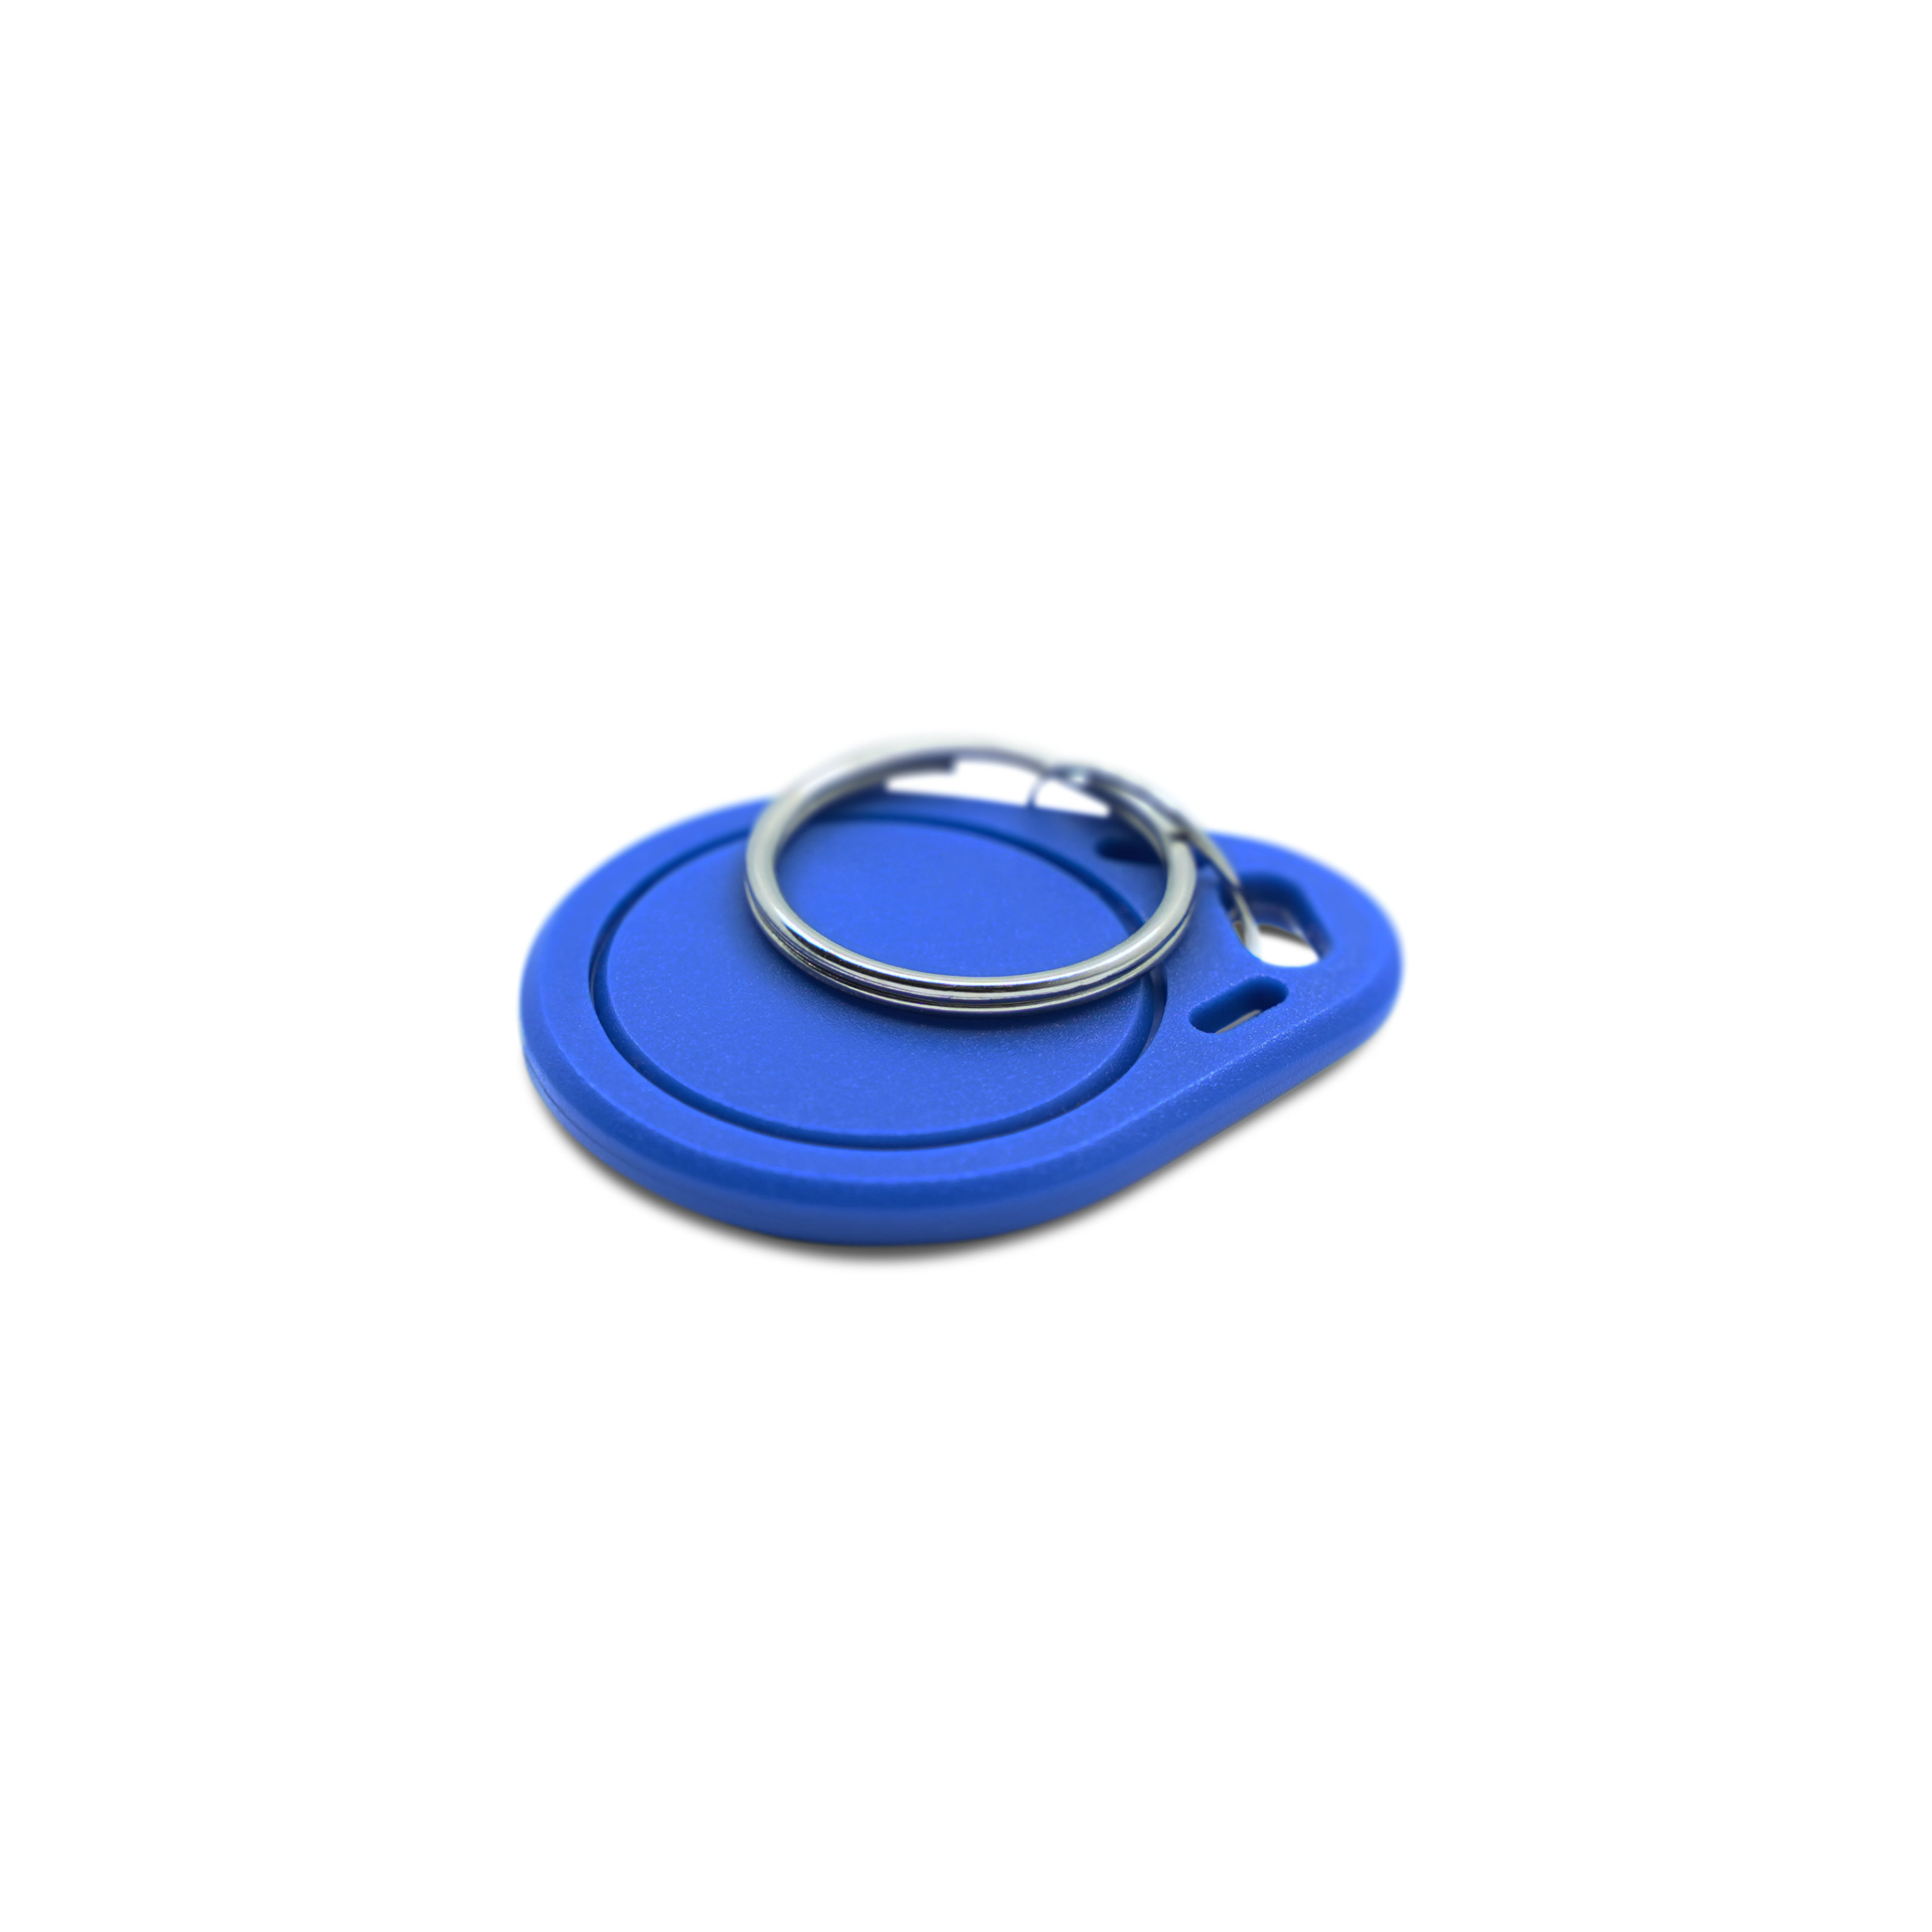 NFC tag ABS - 40 x 32 mm - MIFARE DESFire EV1 4k - 4096 byte - blue